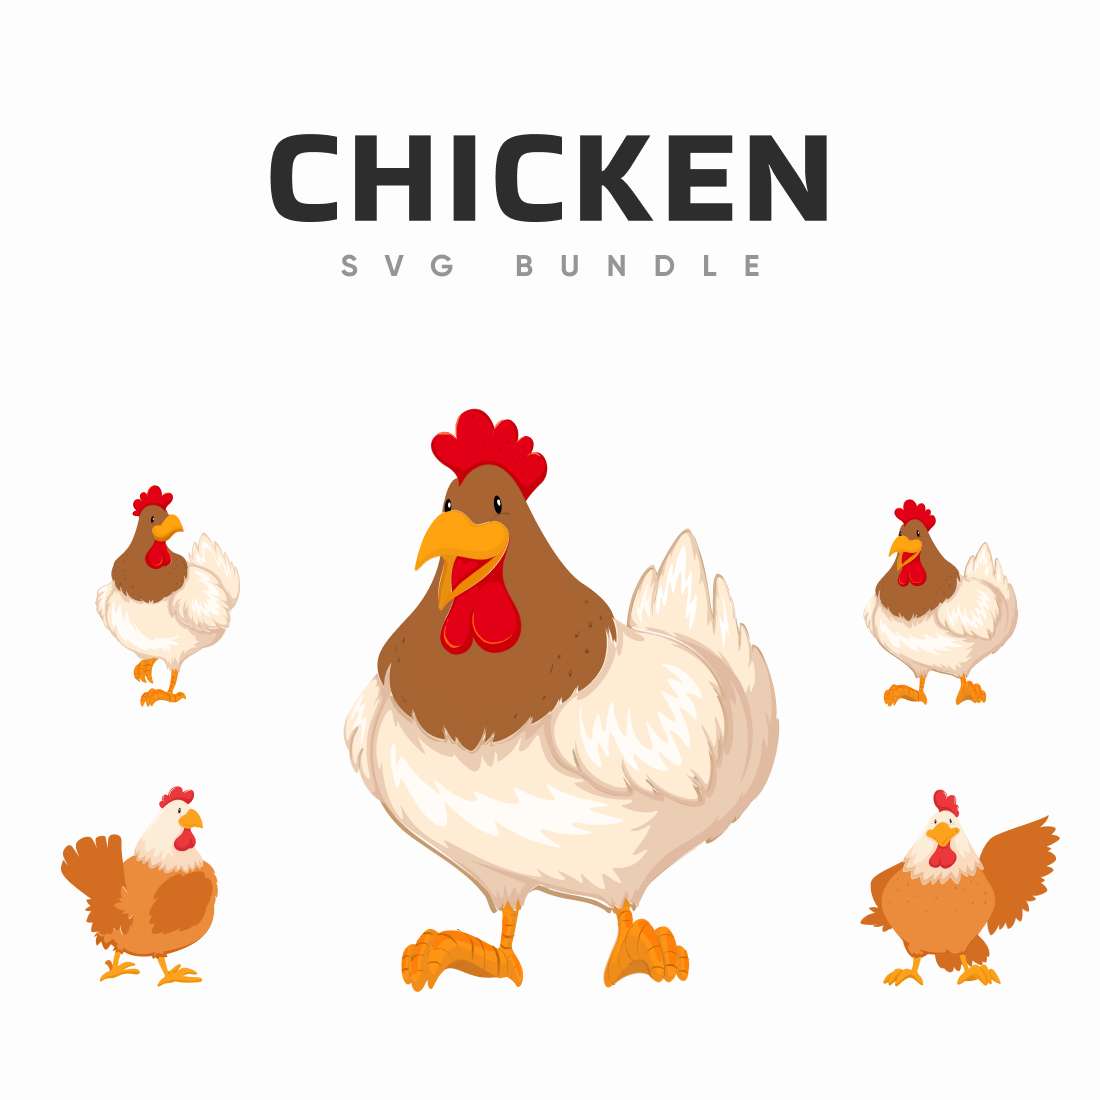 chicken svg files bundle cover image.